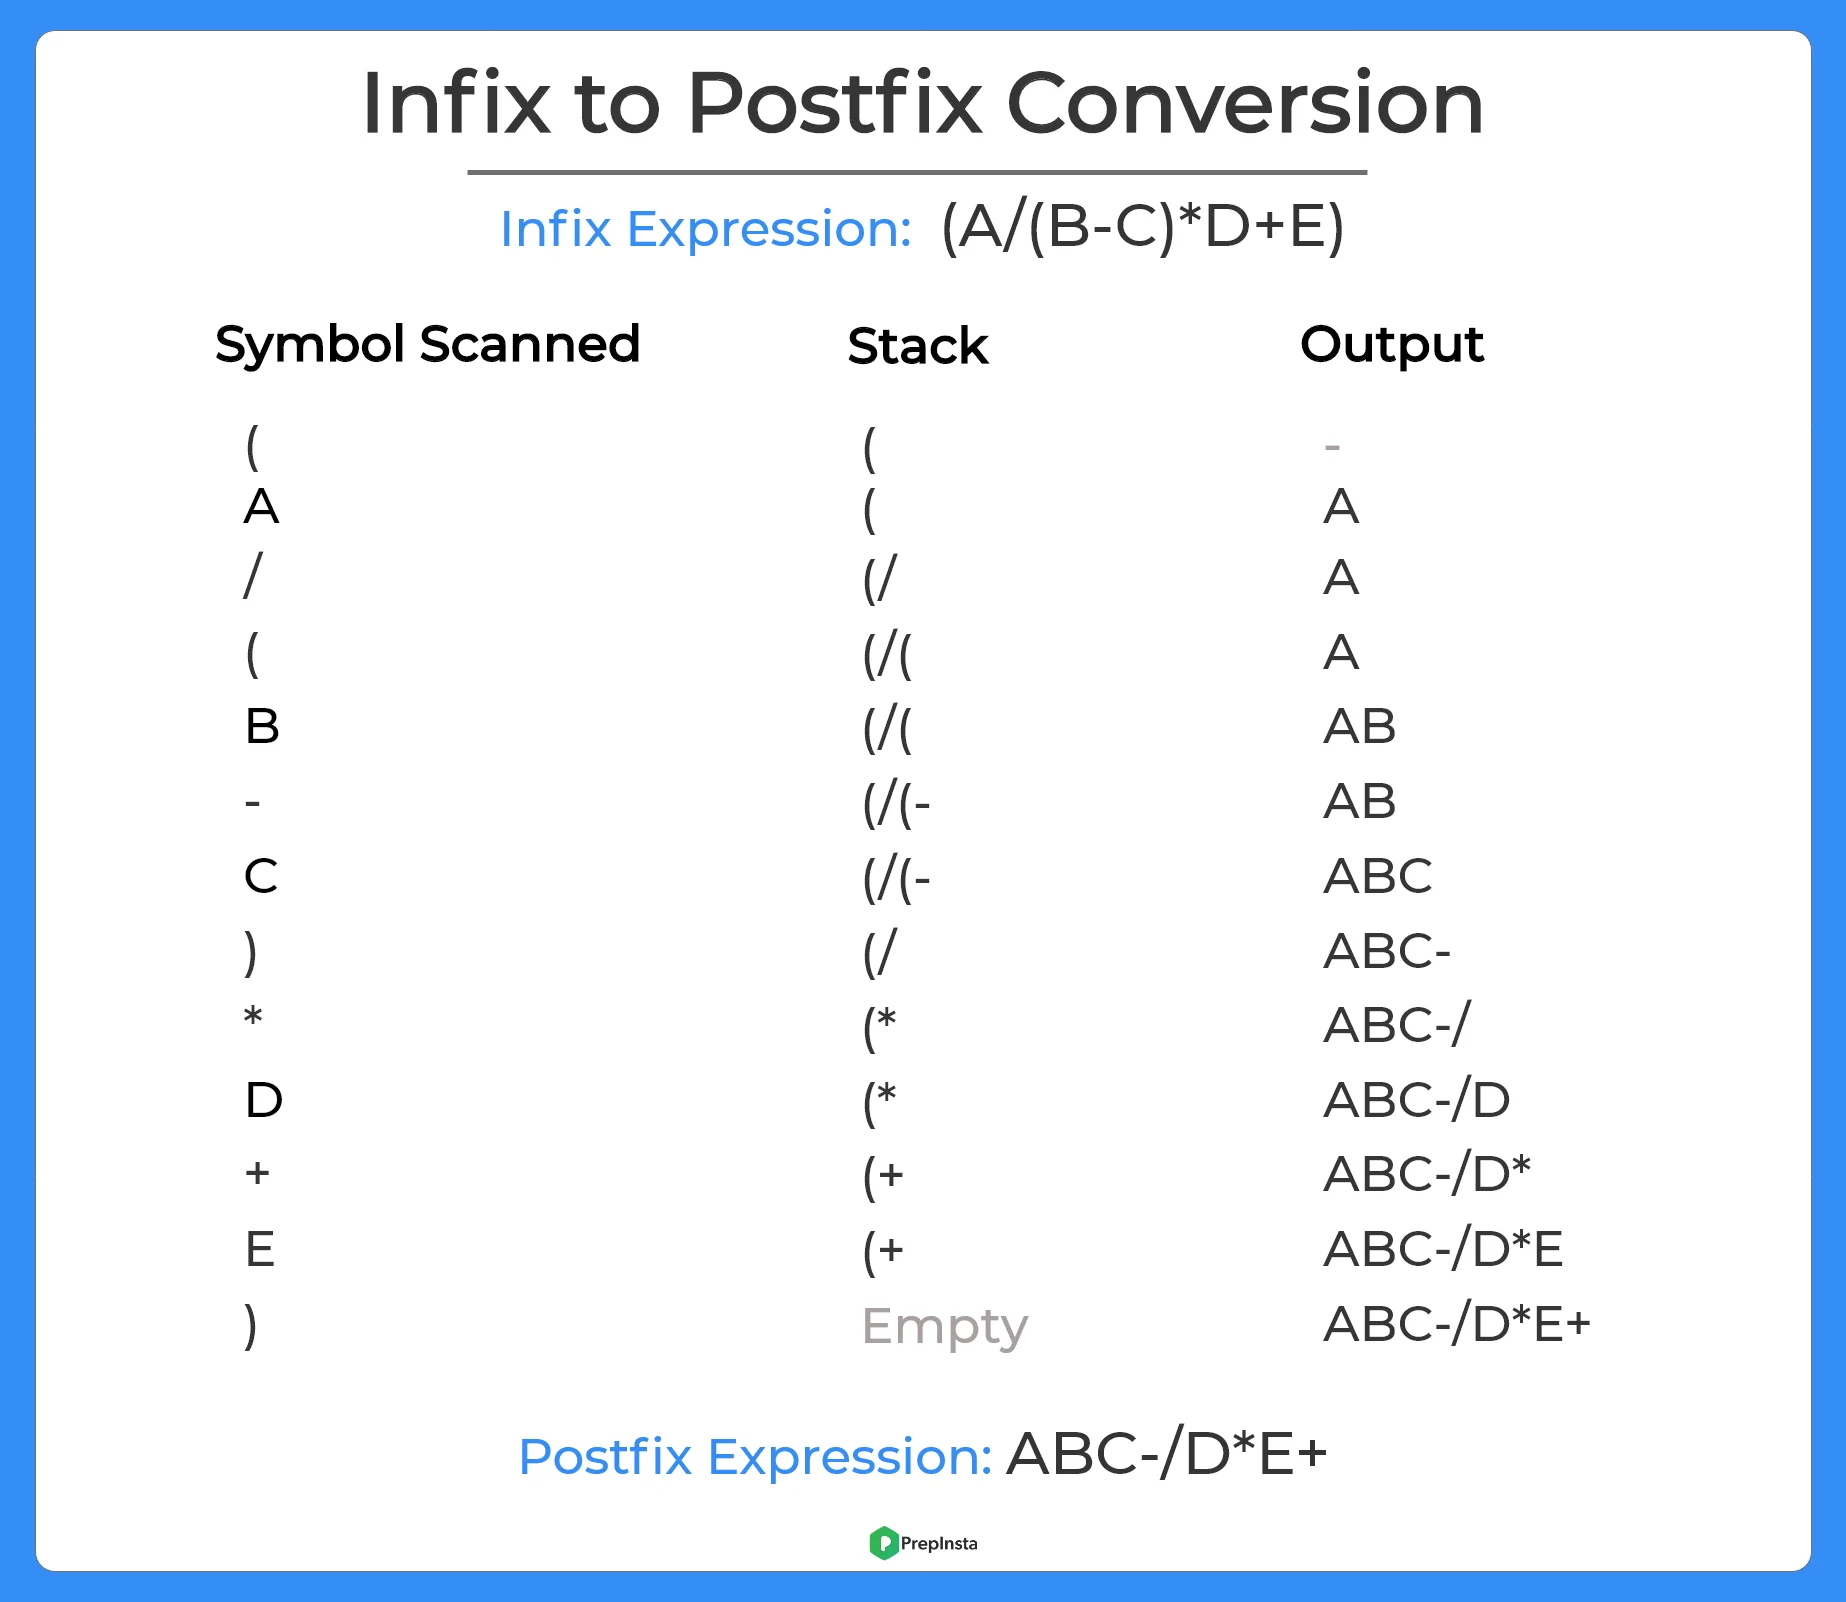 Infix to postfix conversion in C++